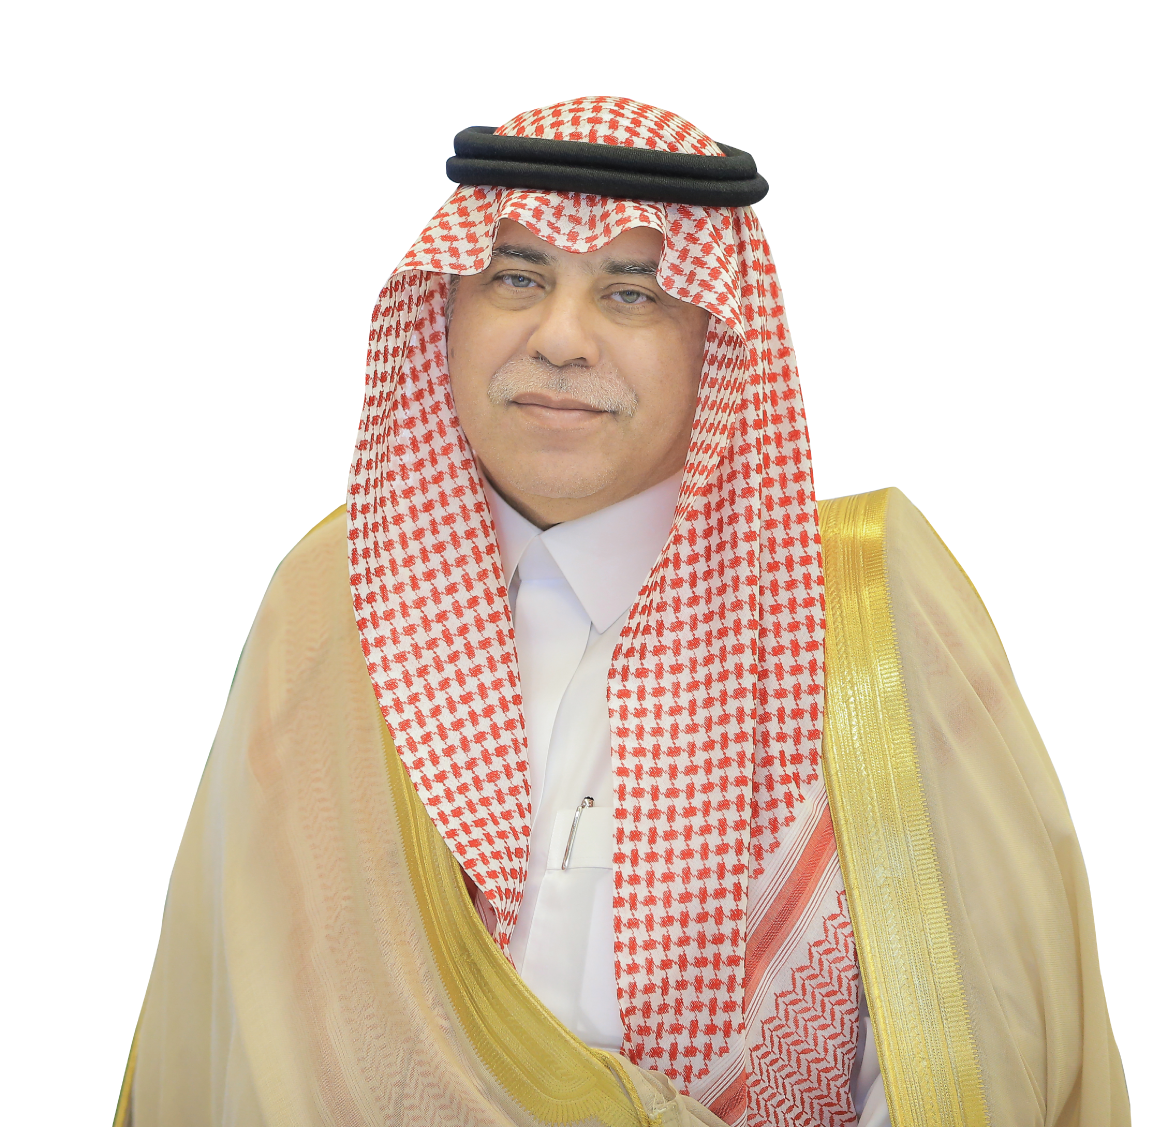 His Excellency Dr. Majid Bin Abdullah Al Qasabi